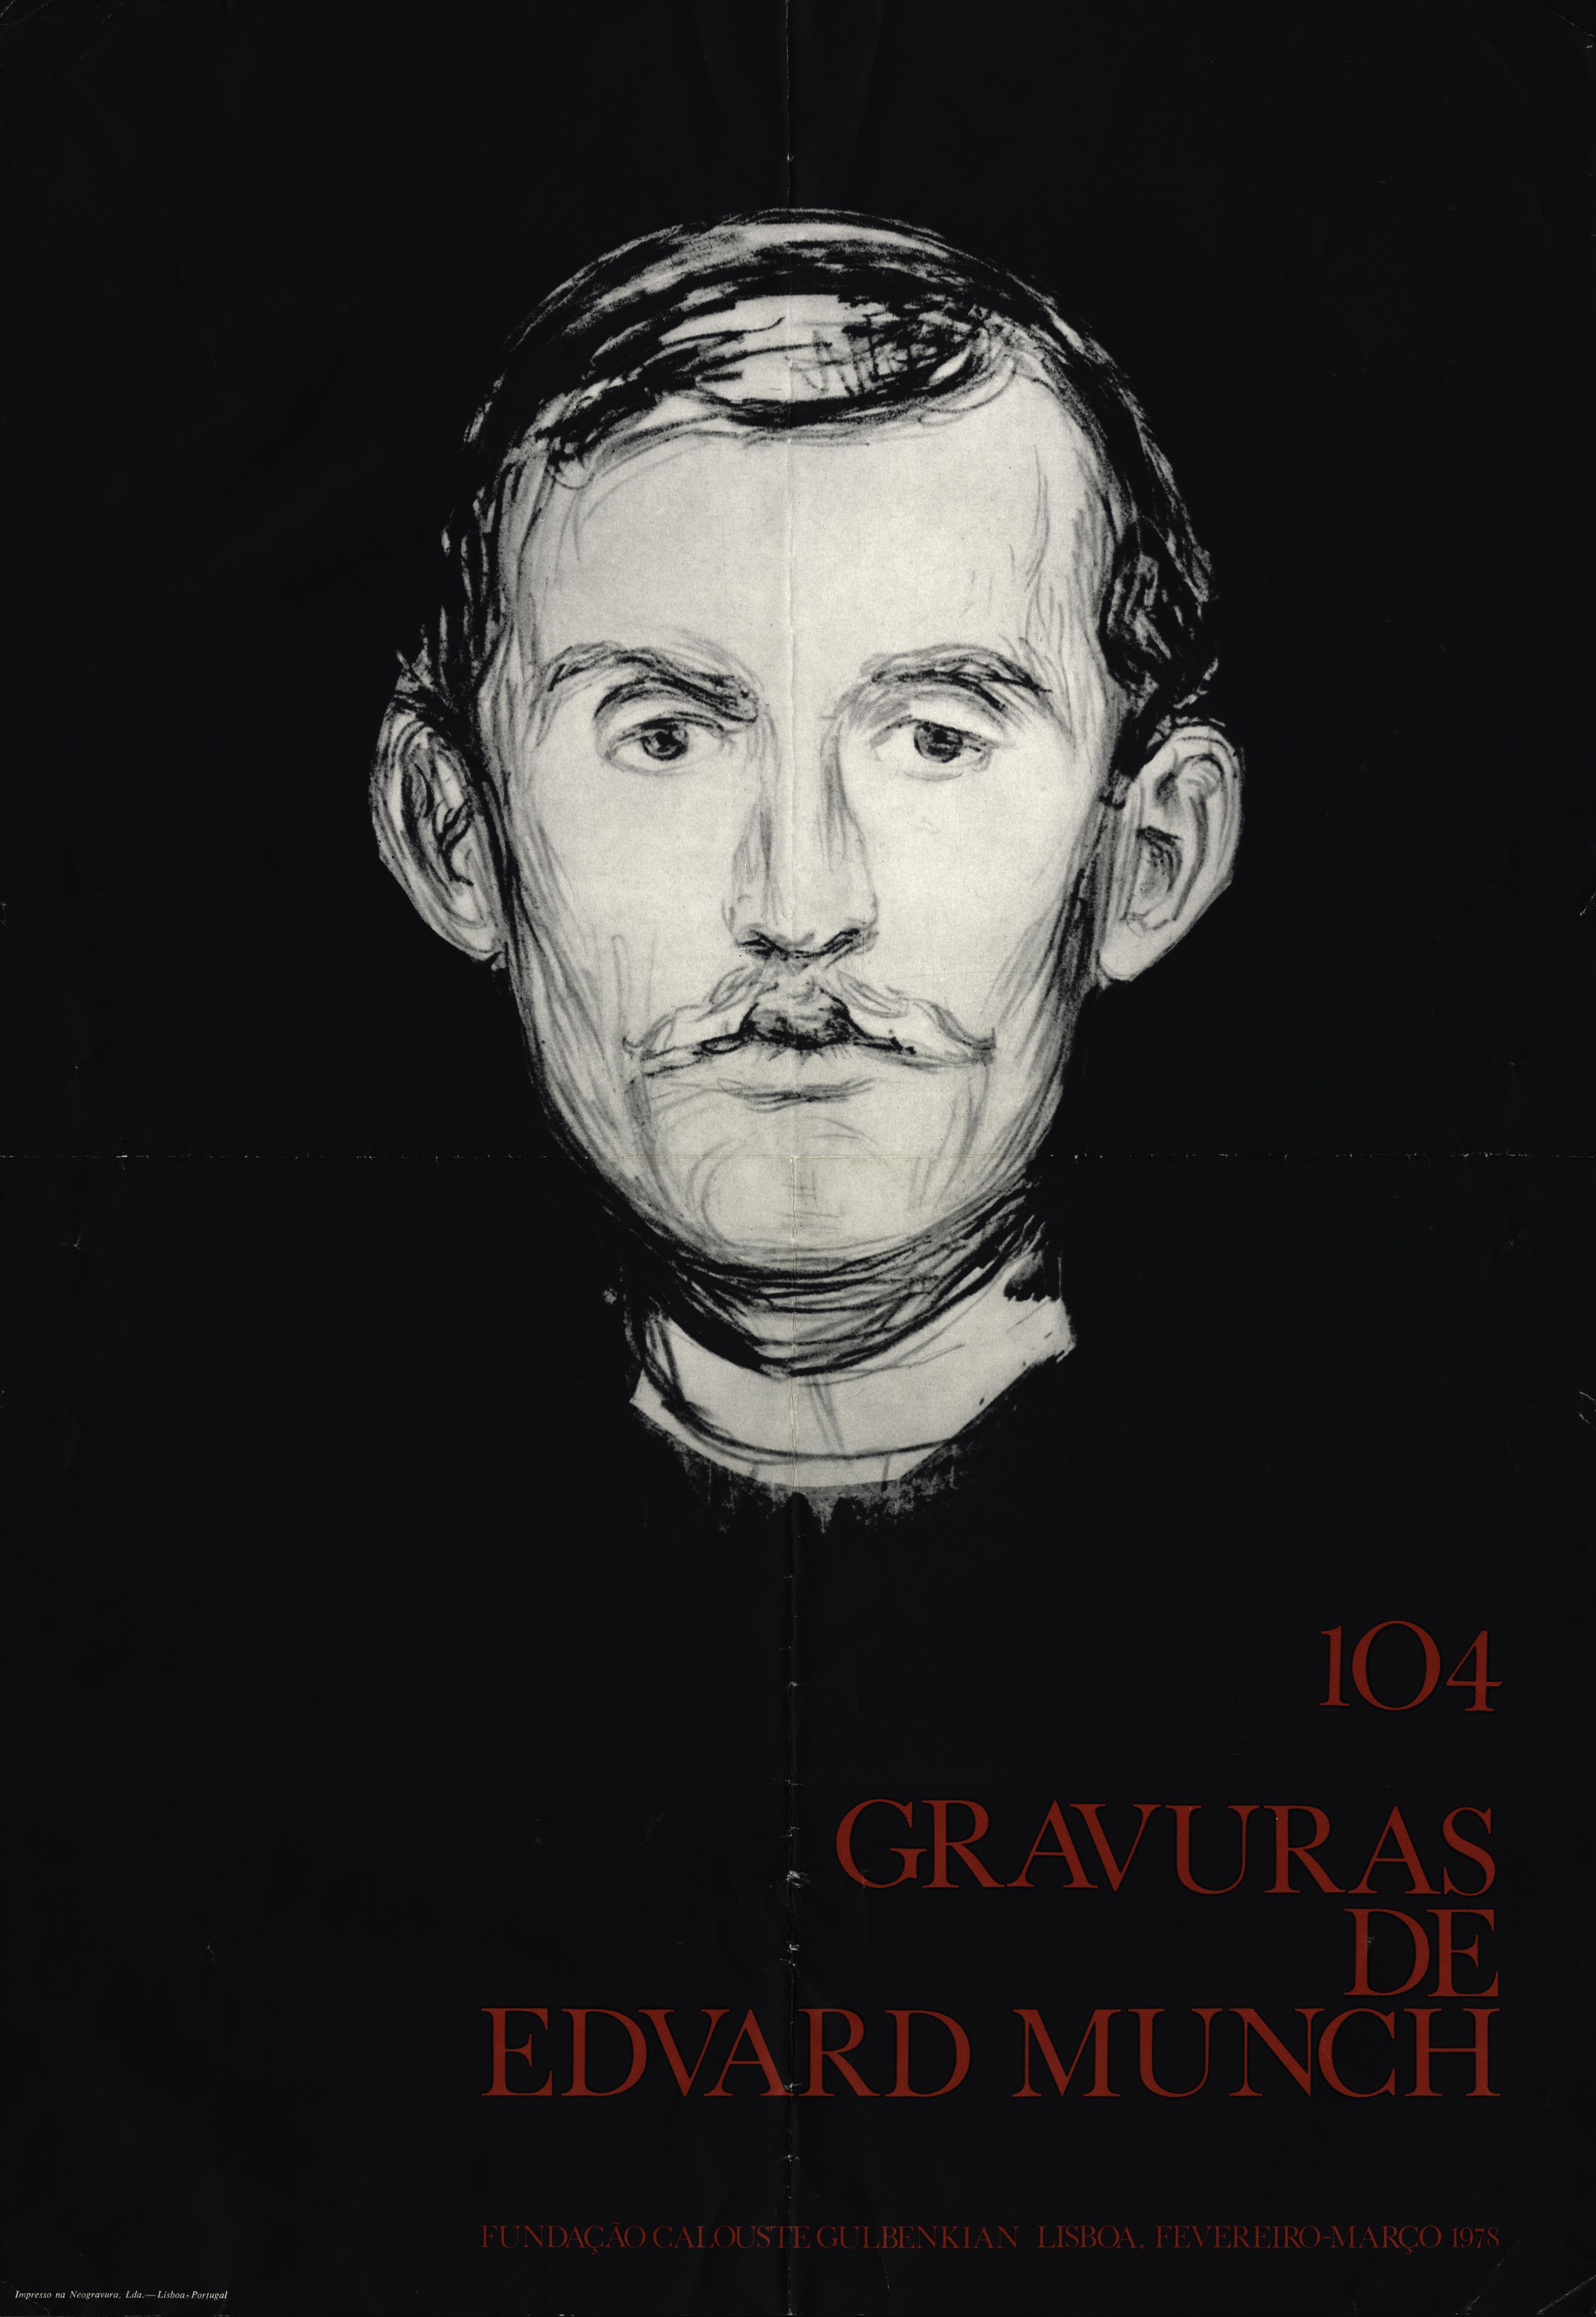 104 Gravuras de Edvard Munch